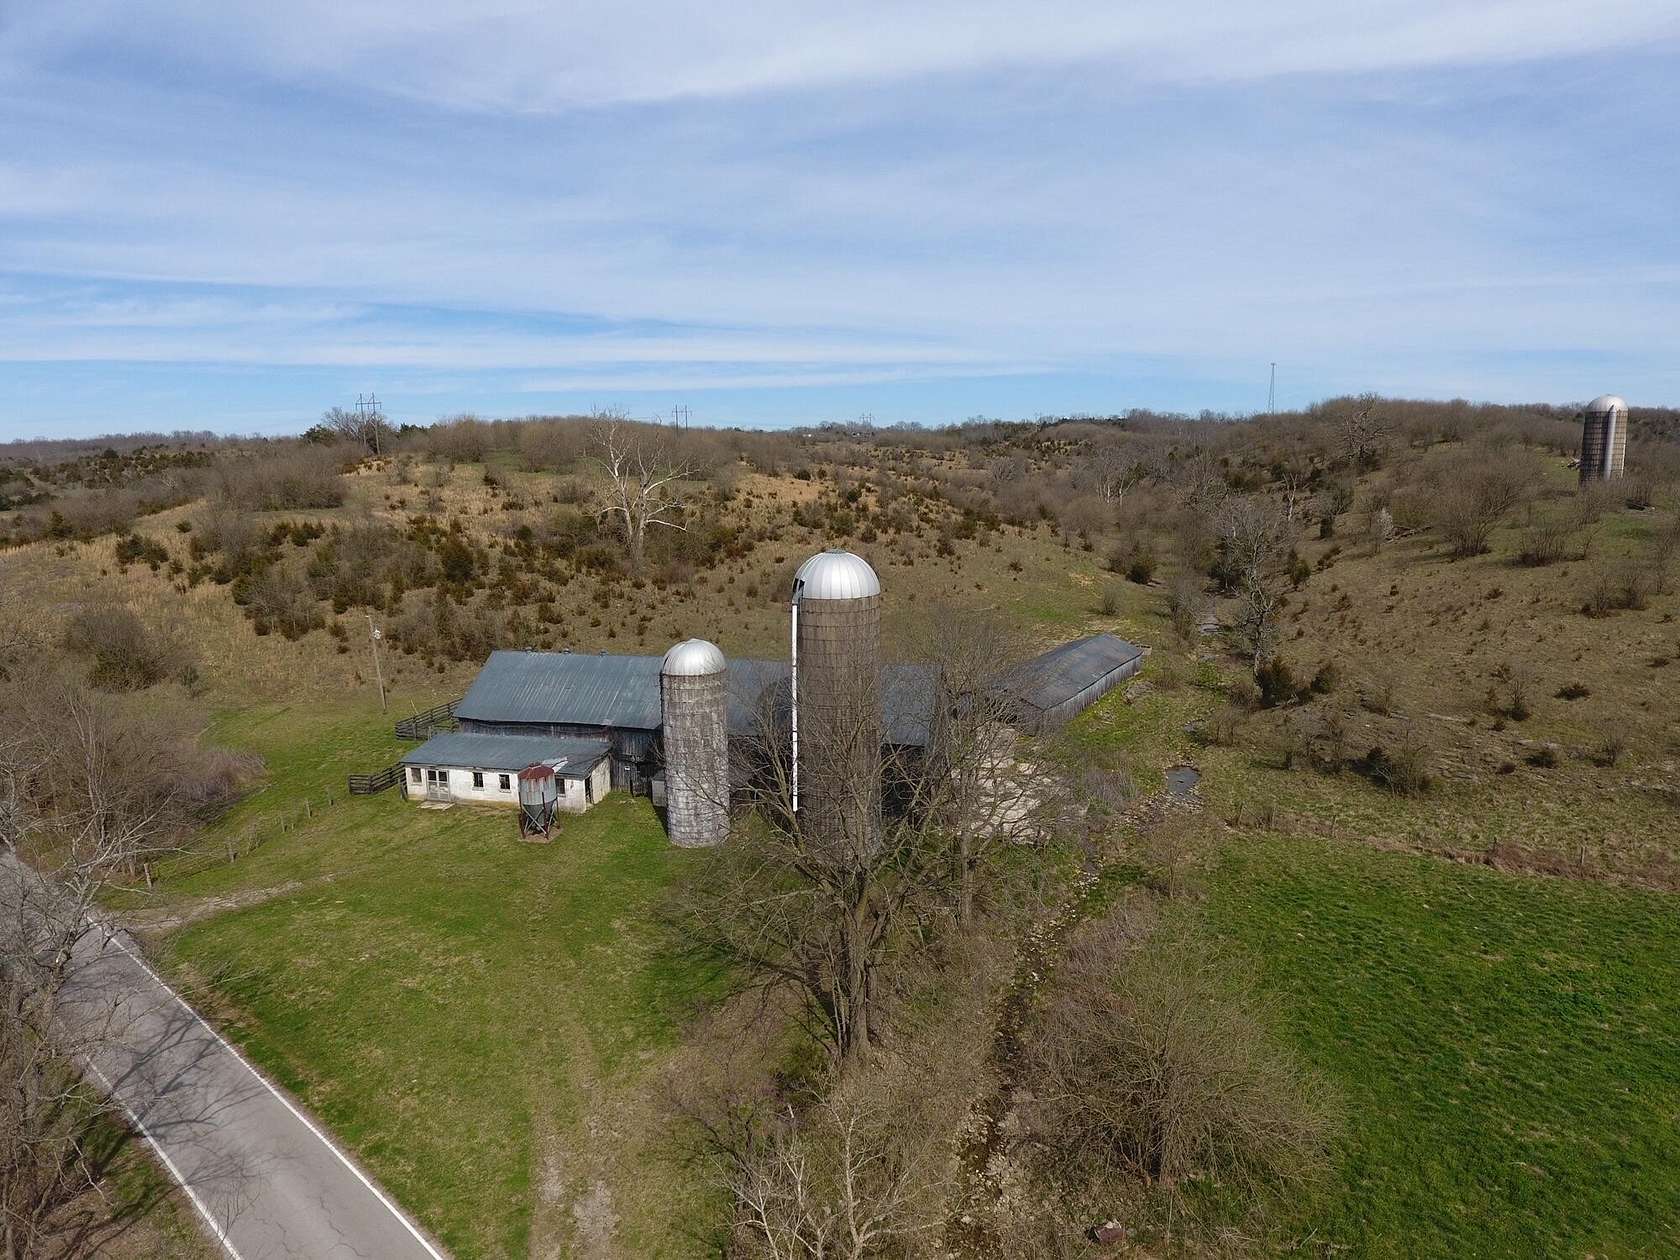 75 Acres of Recreational Land & Farm for Sale in Harrodsburg, Kentucky